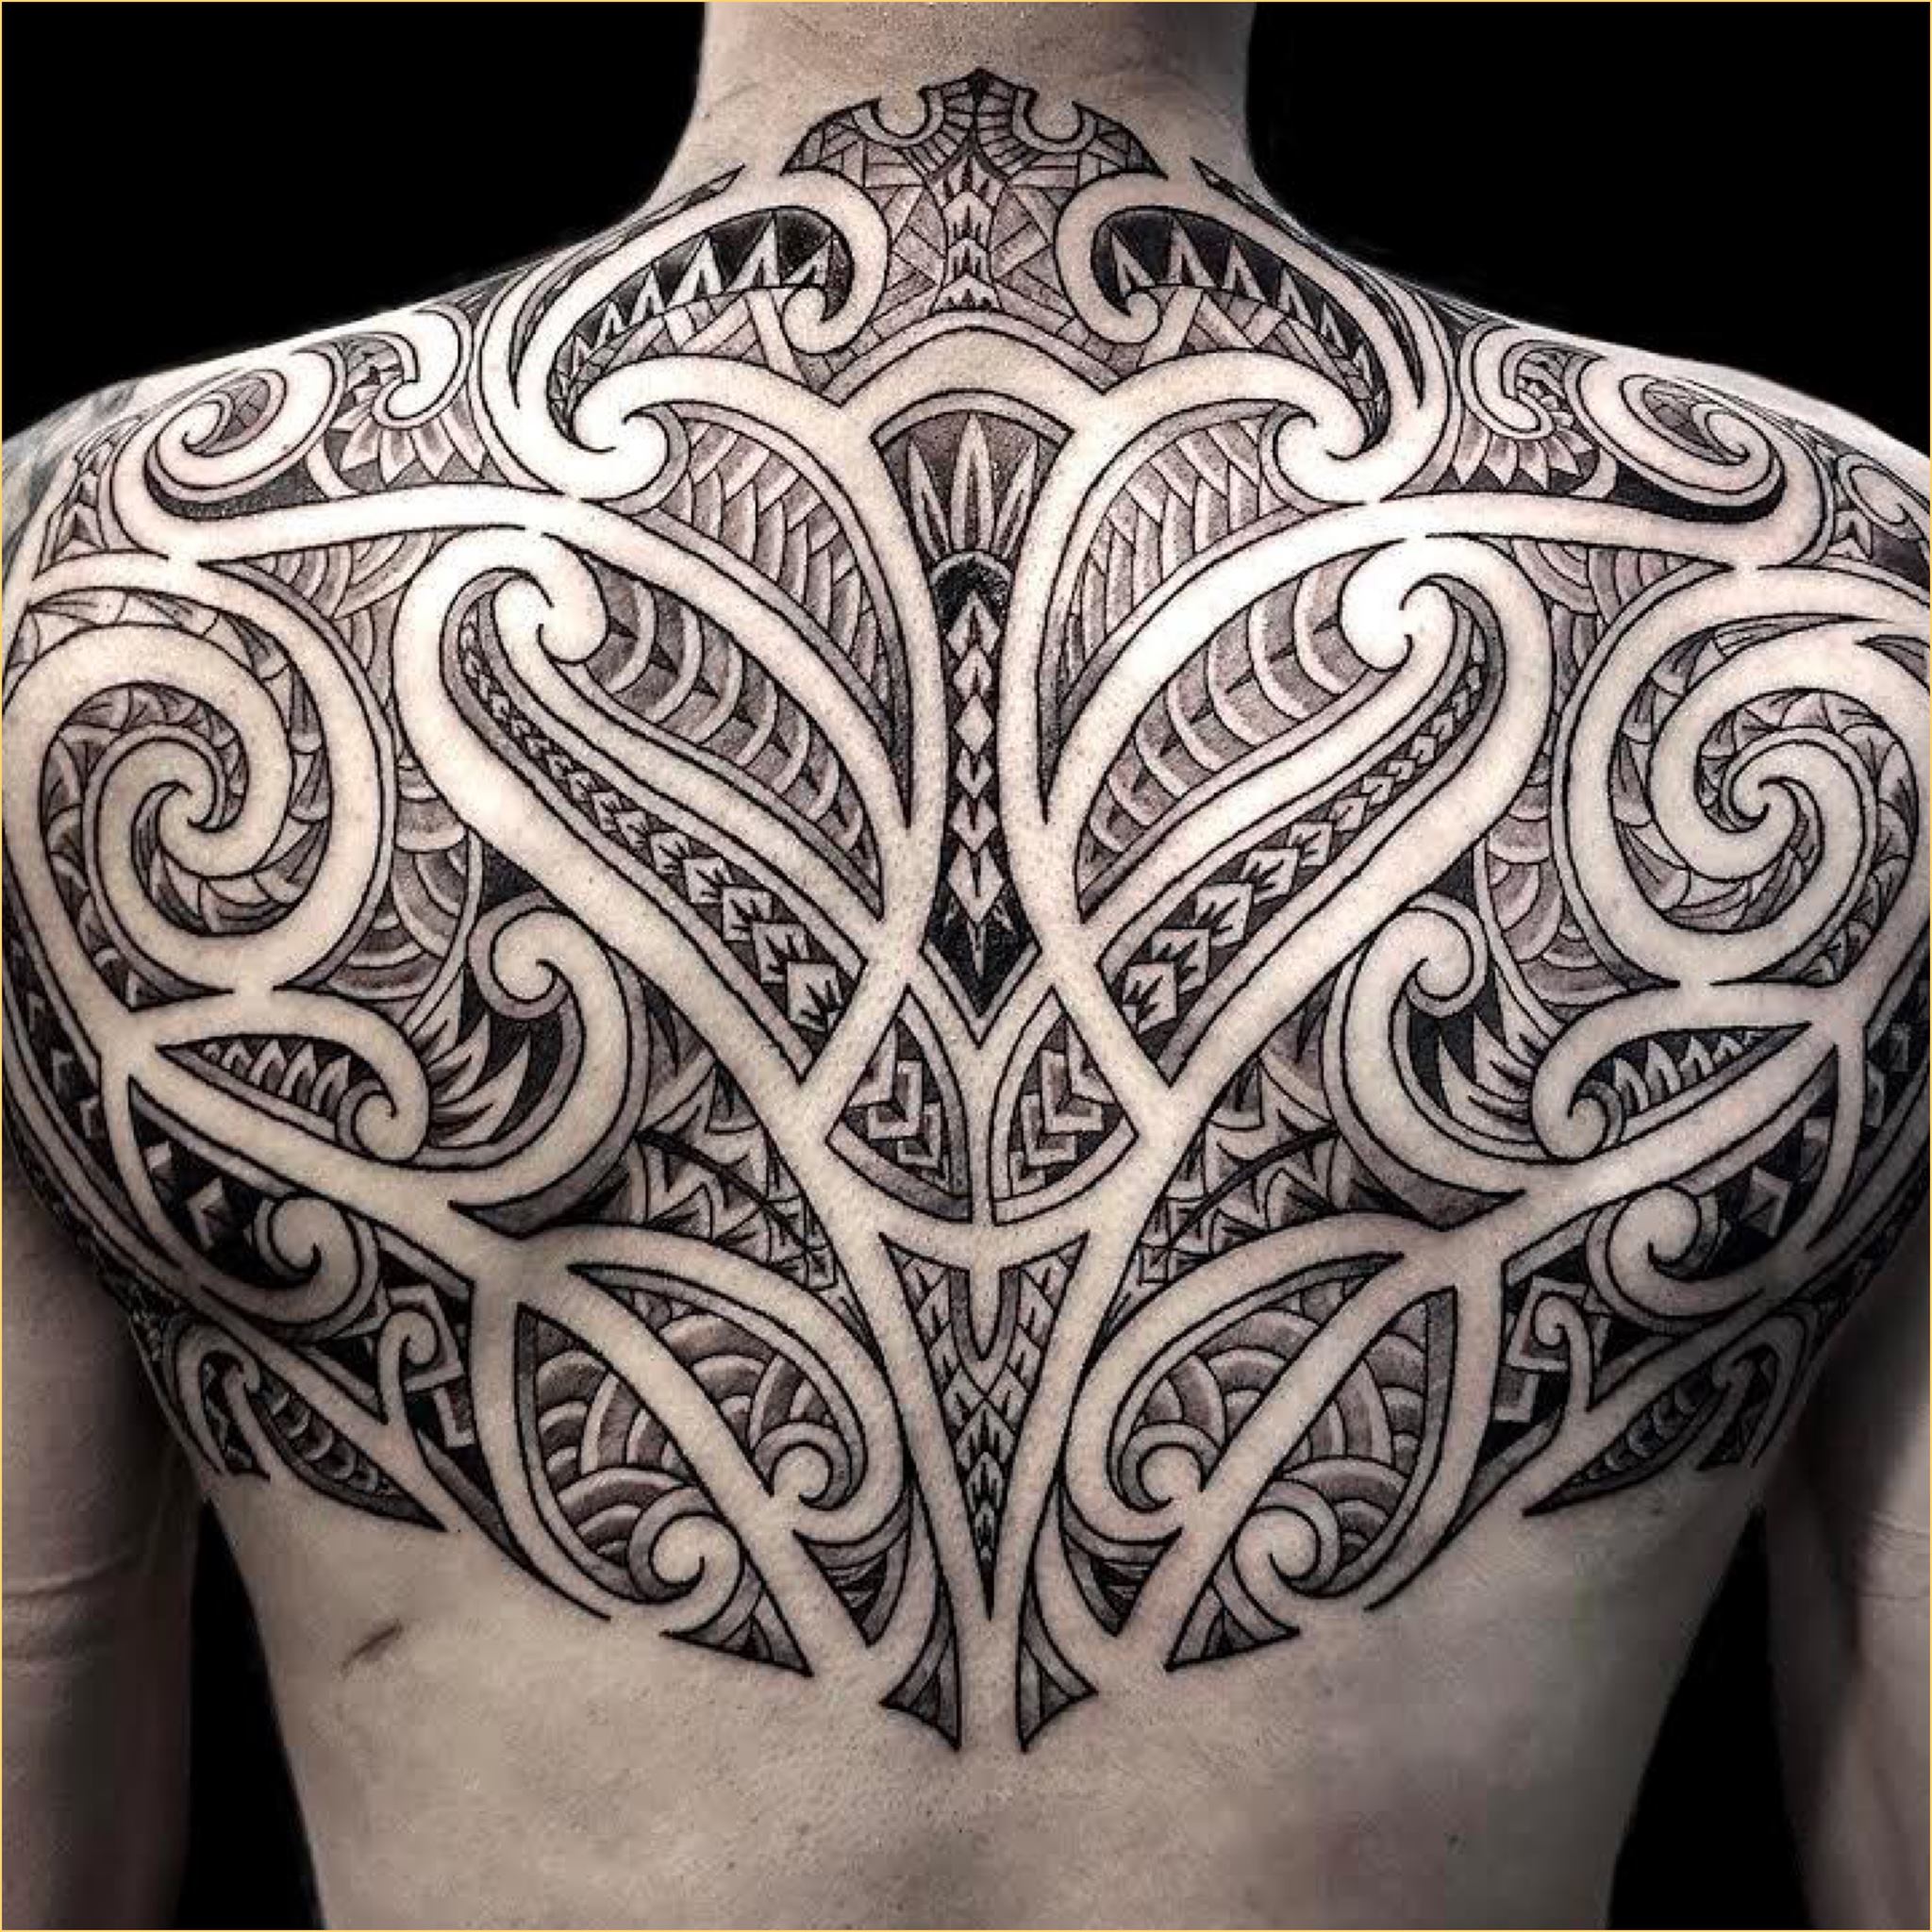 Top 15 Tattoo Artists in Sydney - Body Art Guru